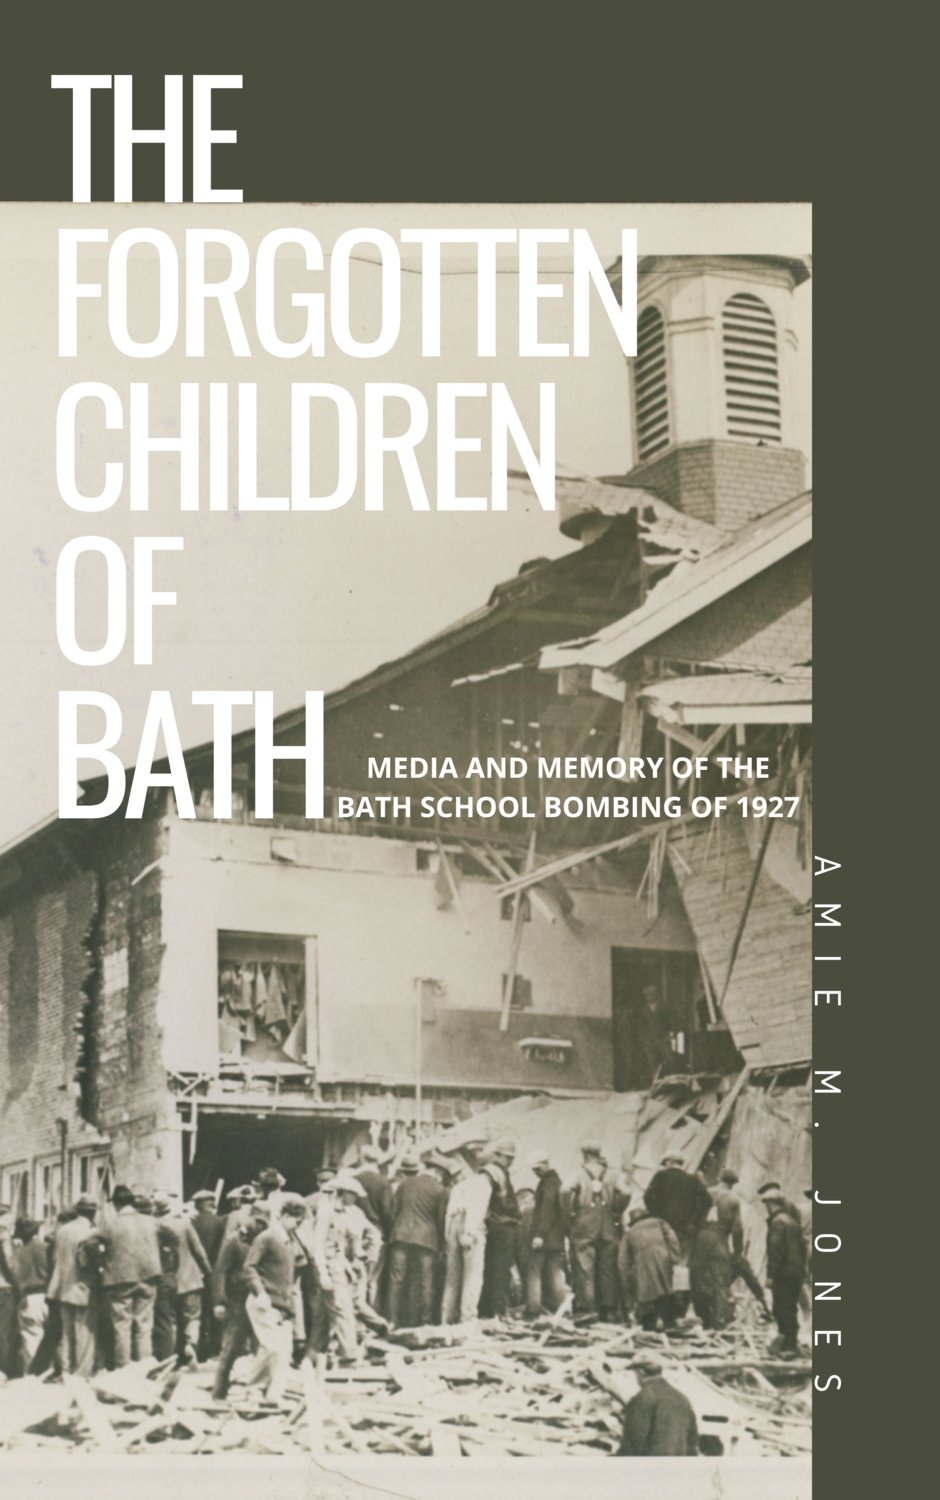 “Bath Massacre” and “The Forgotten Children of Bath” both painstakingly retell the tragic 1927 school bombing.